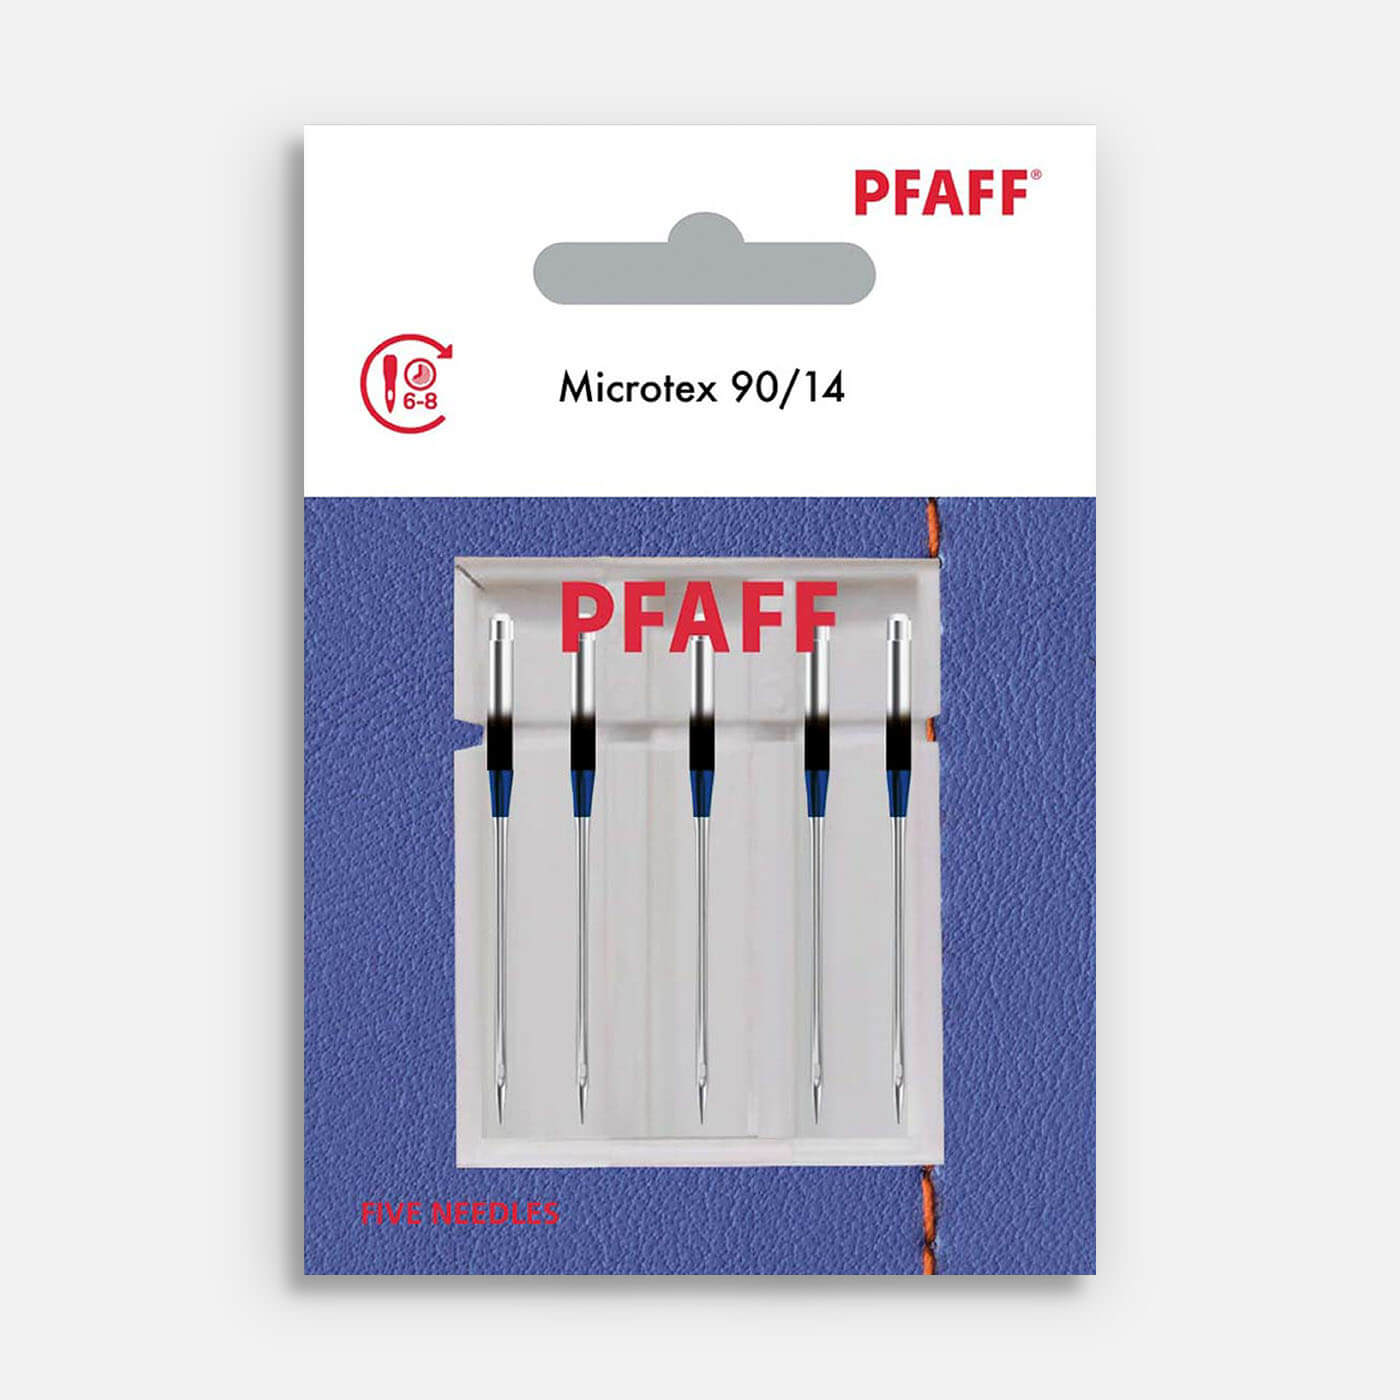 PFAFF Microtex 90/14 Needles (5 Pack)